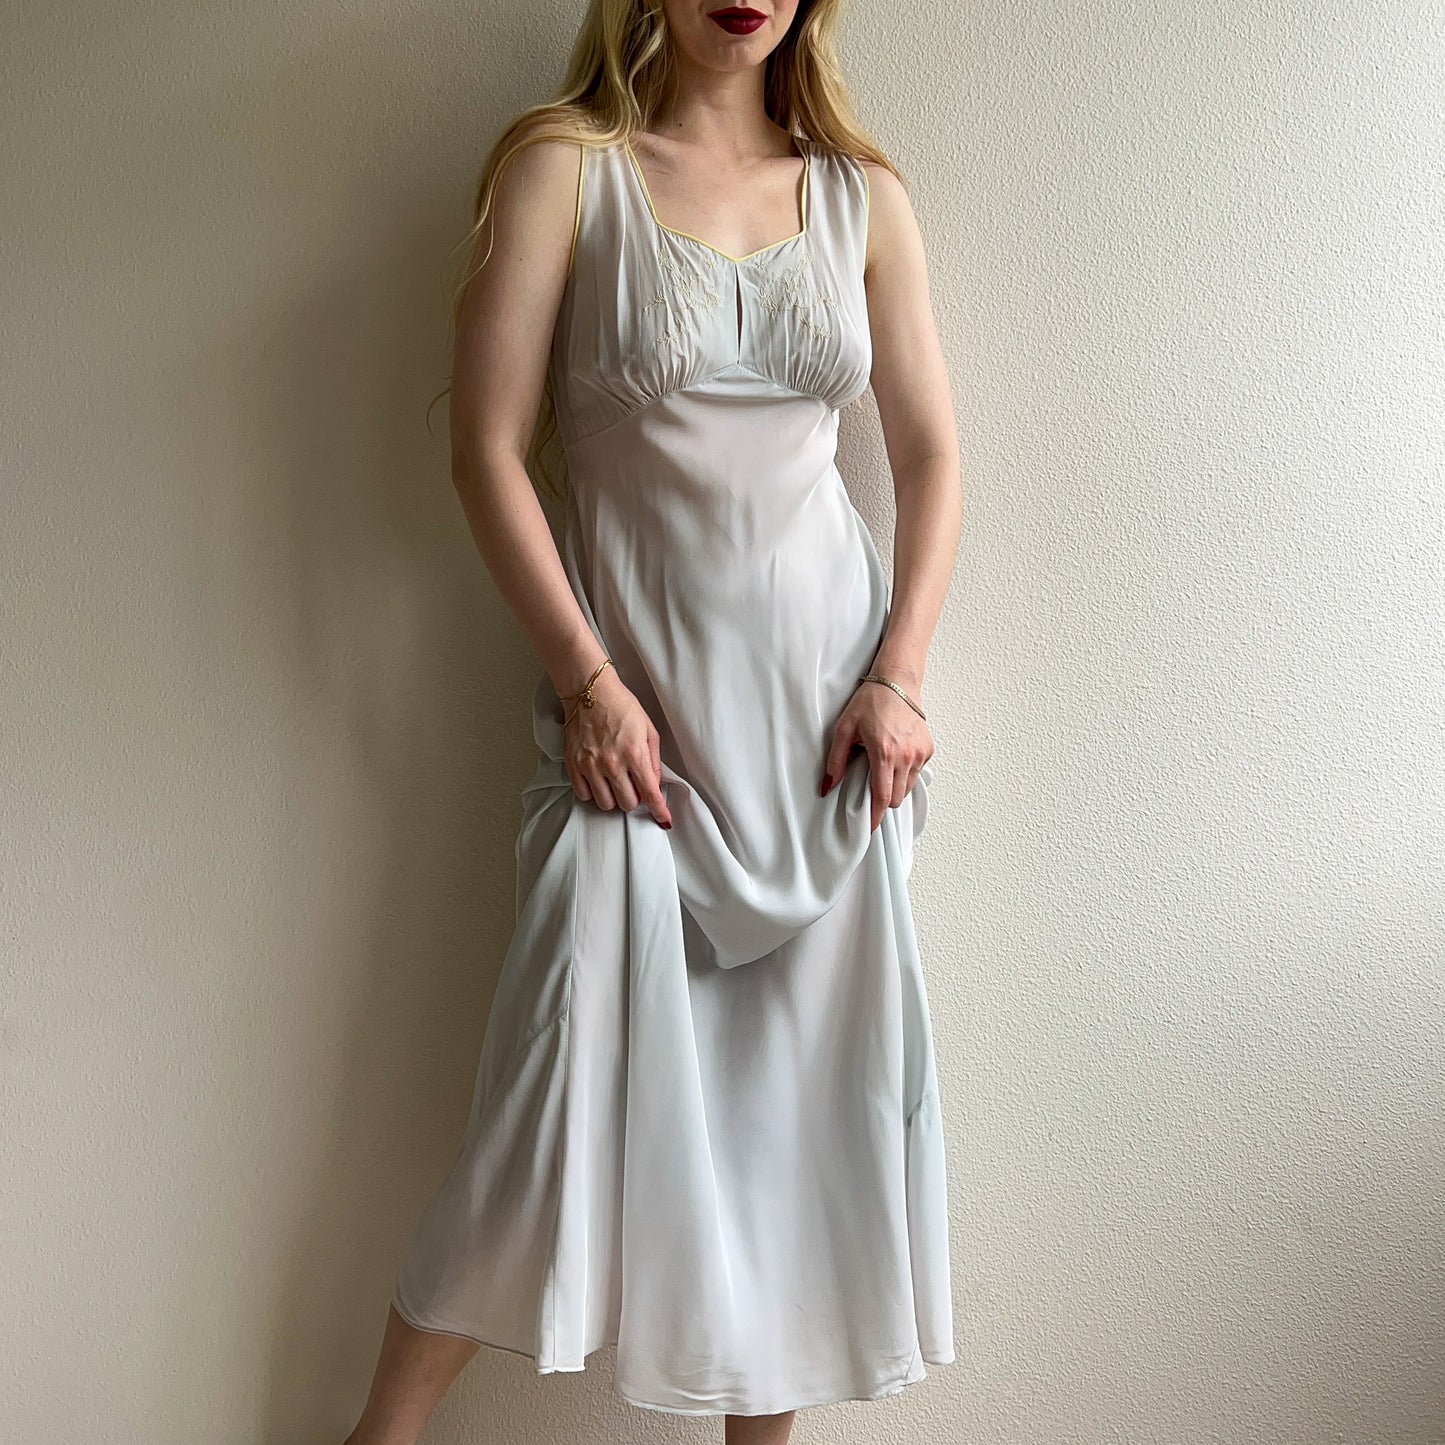 Deadstock 1950s Pale Blue Slip Dress (S/M)